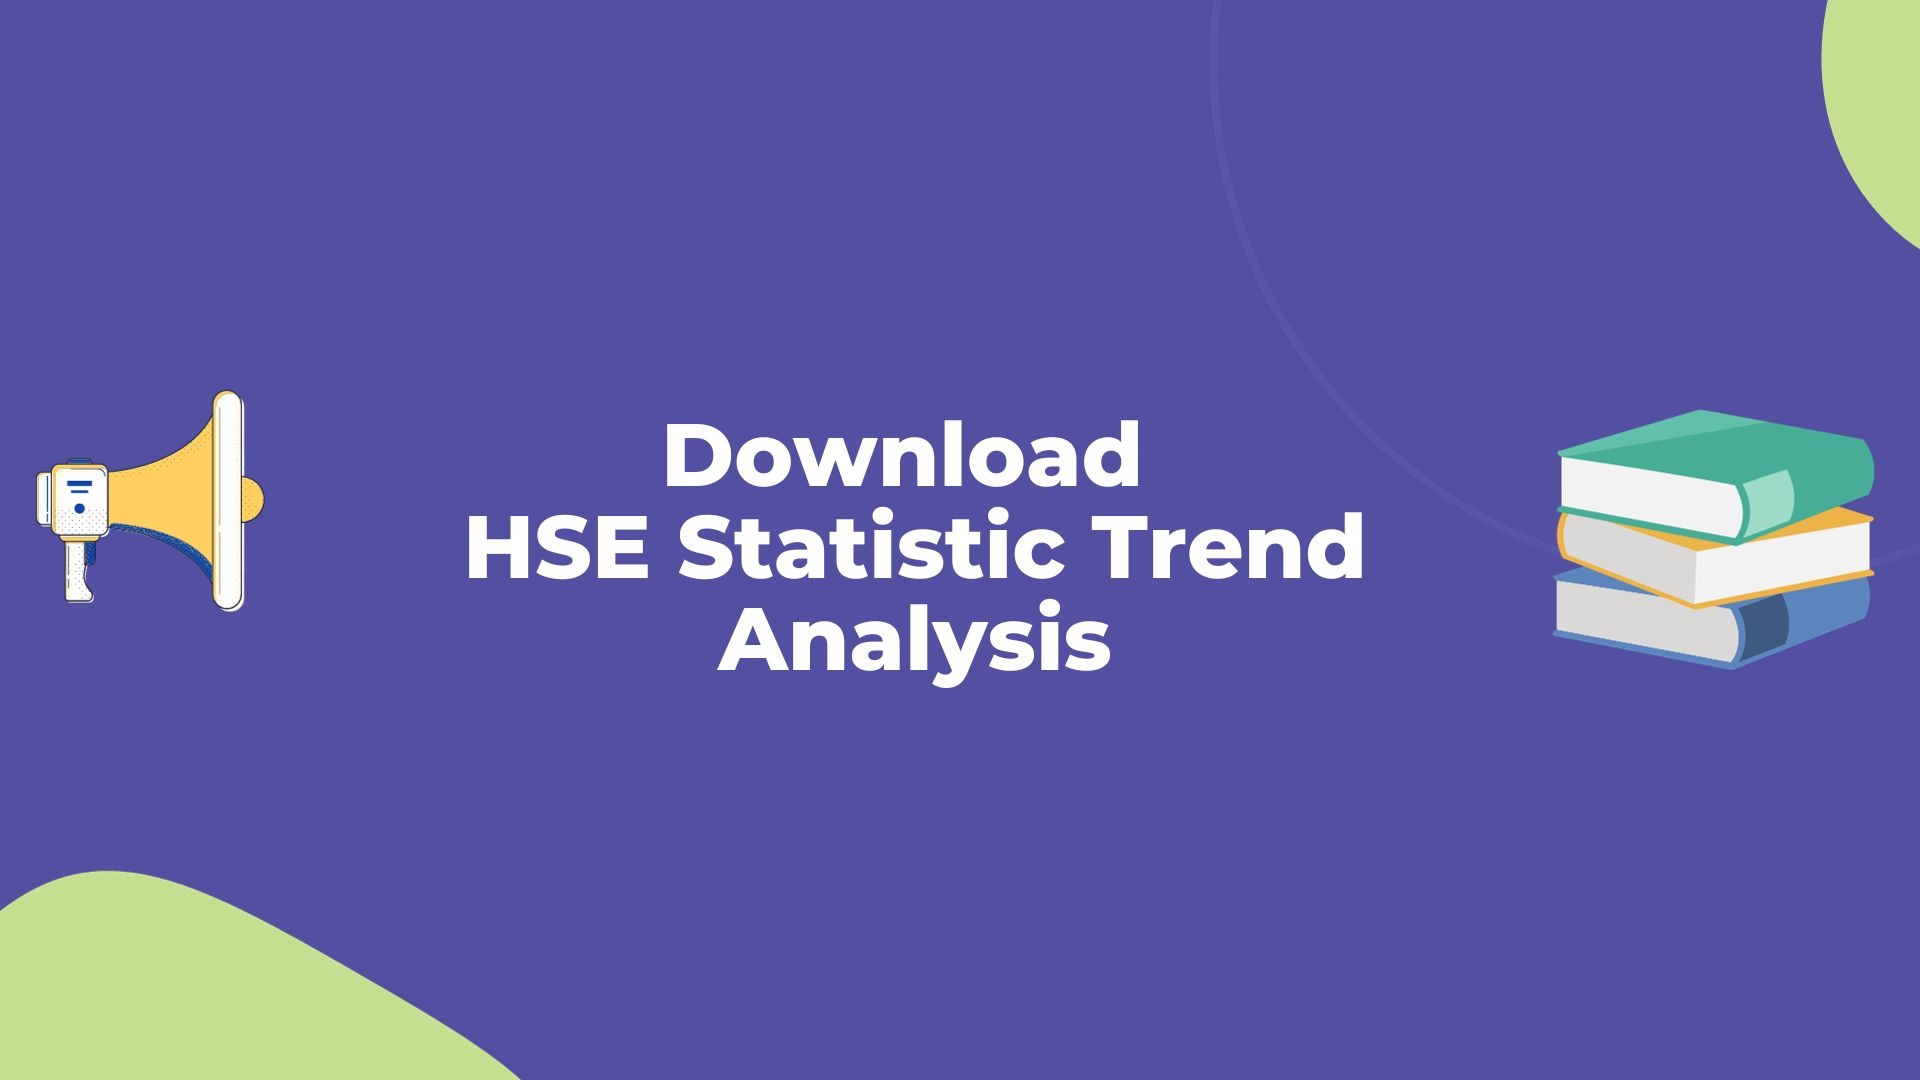 HSE Statistic Trend Analysis